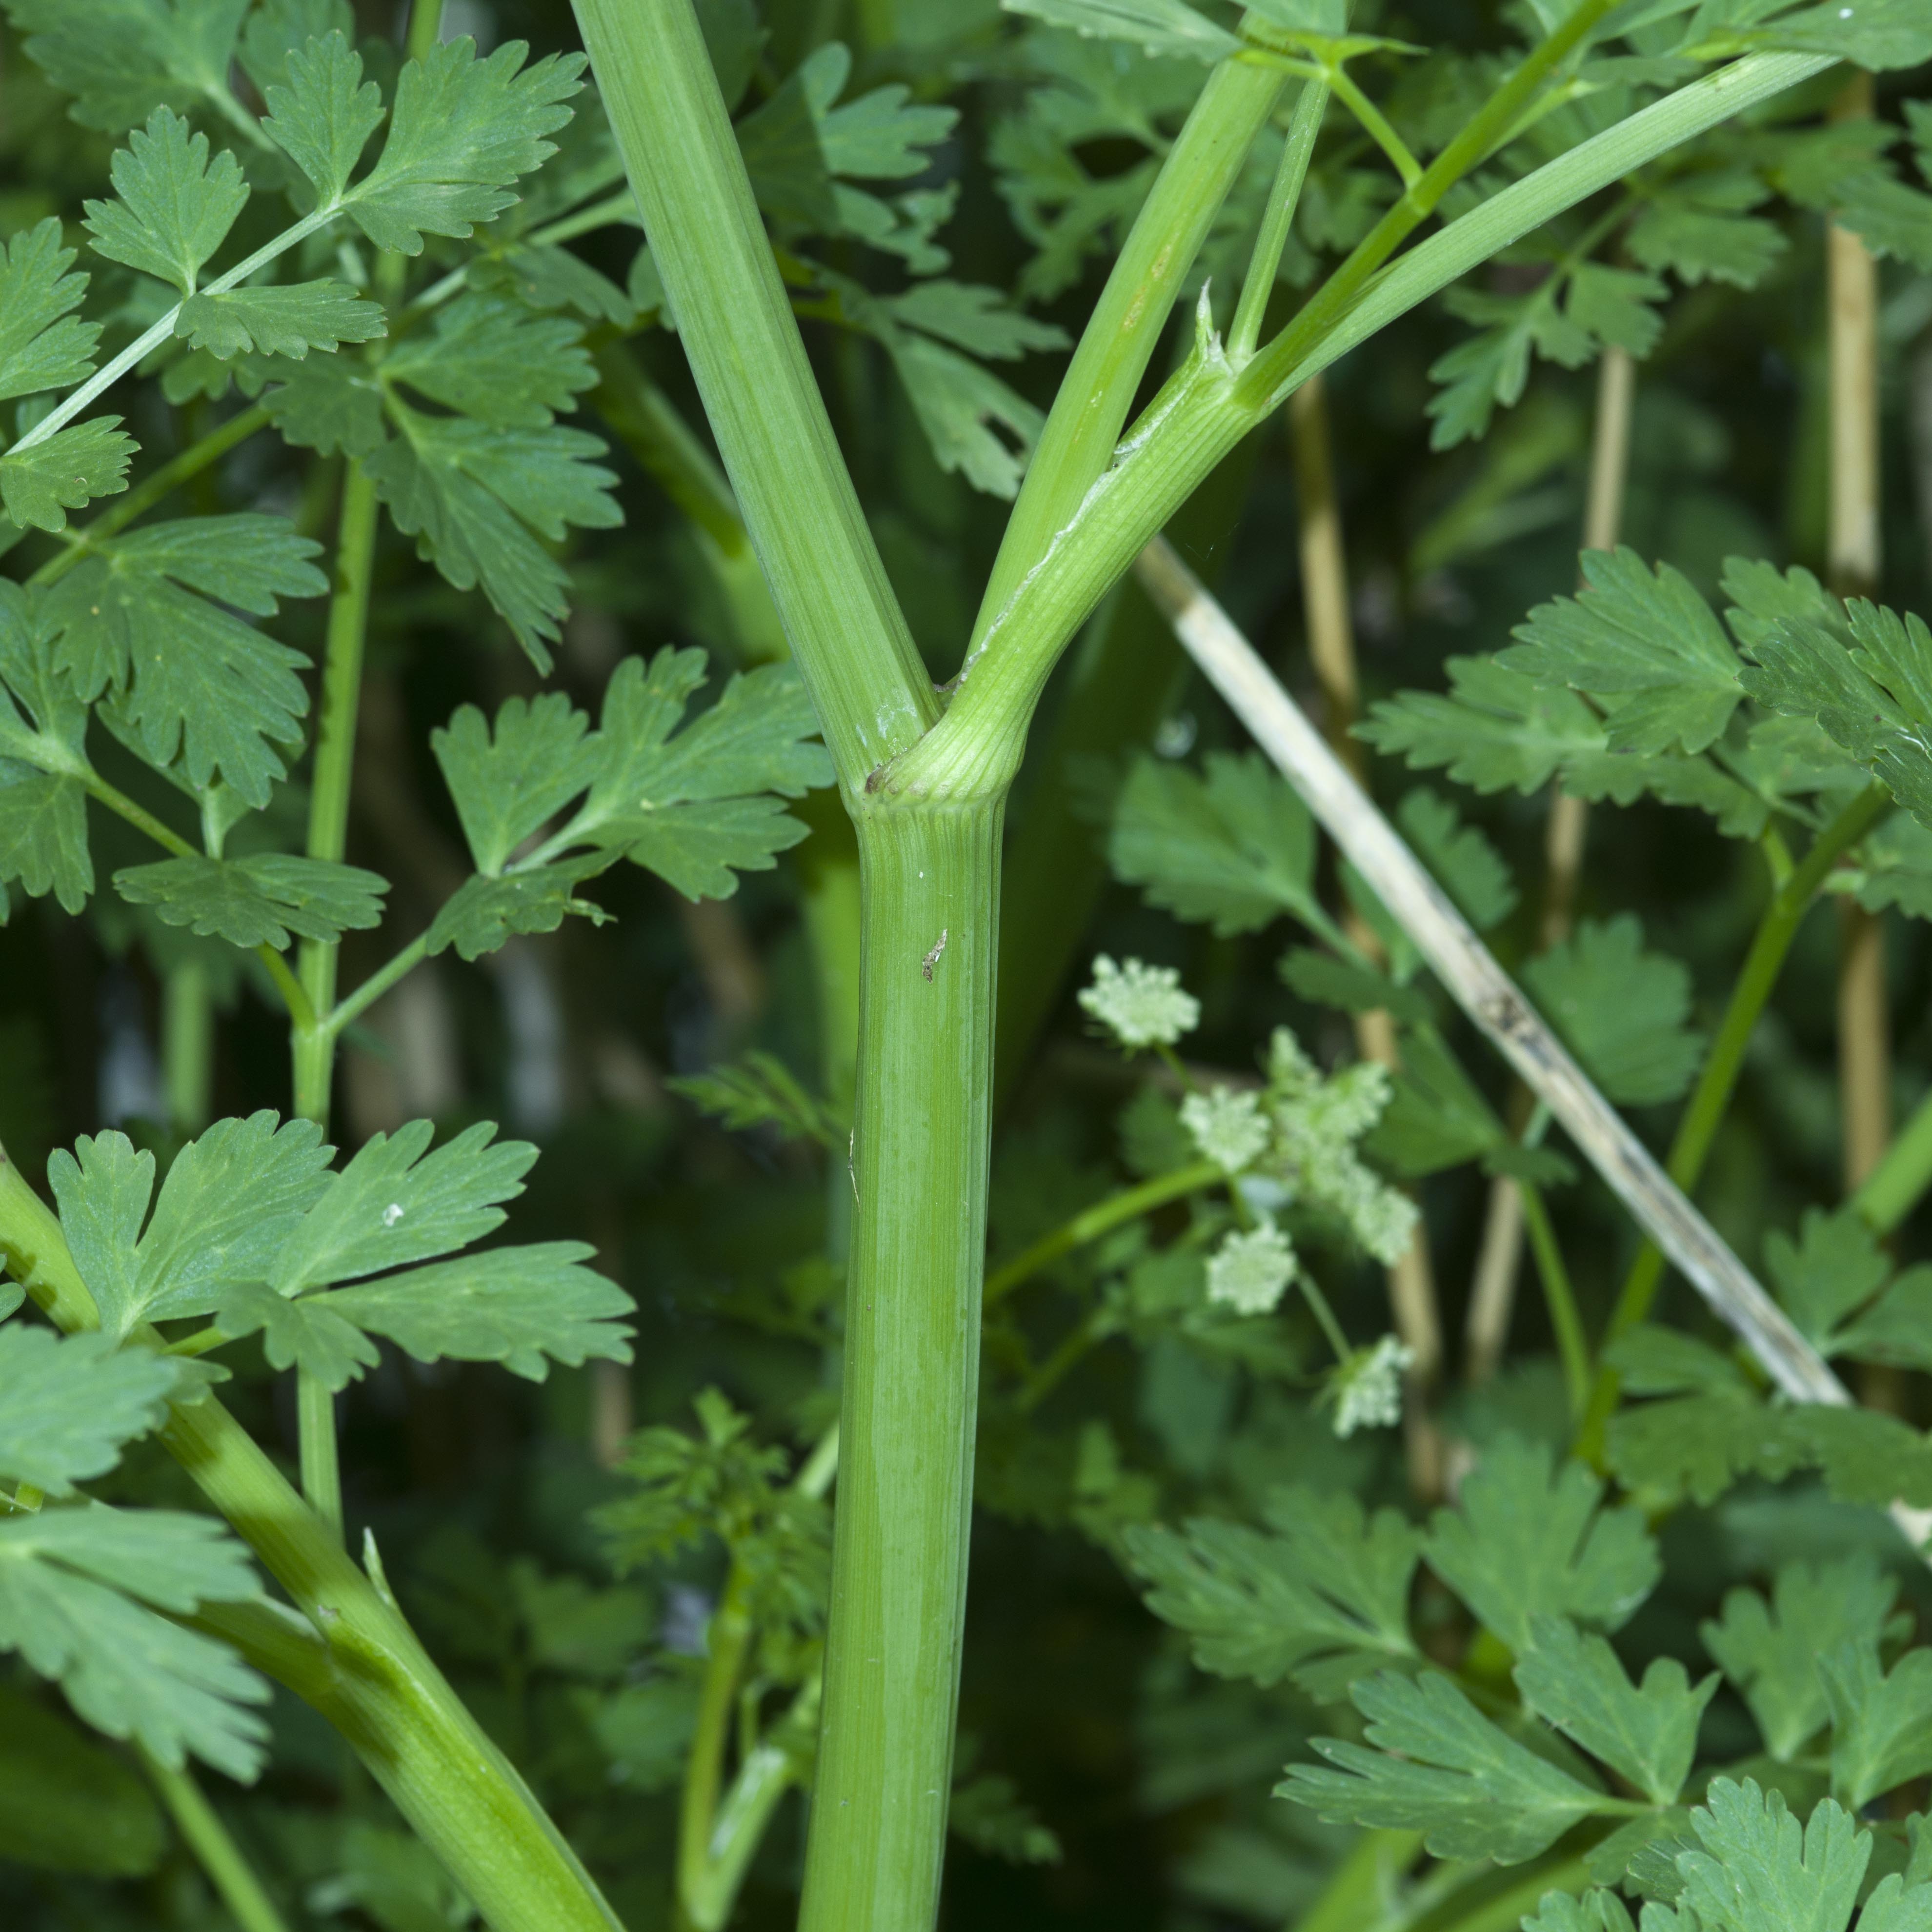 Cow parsley main stems